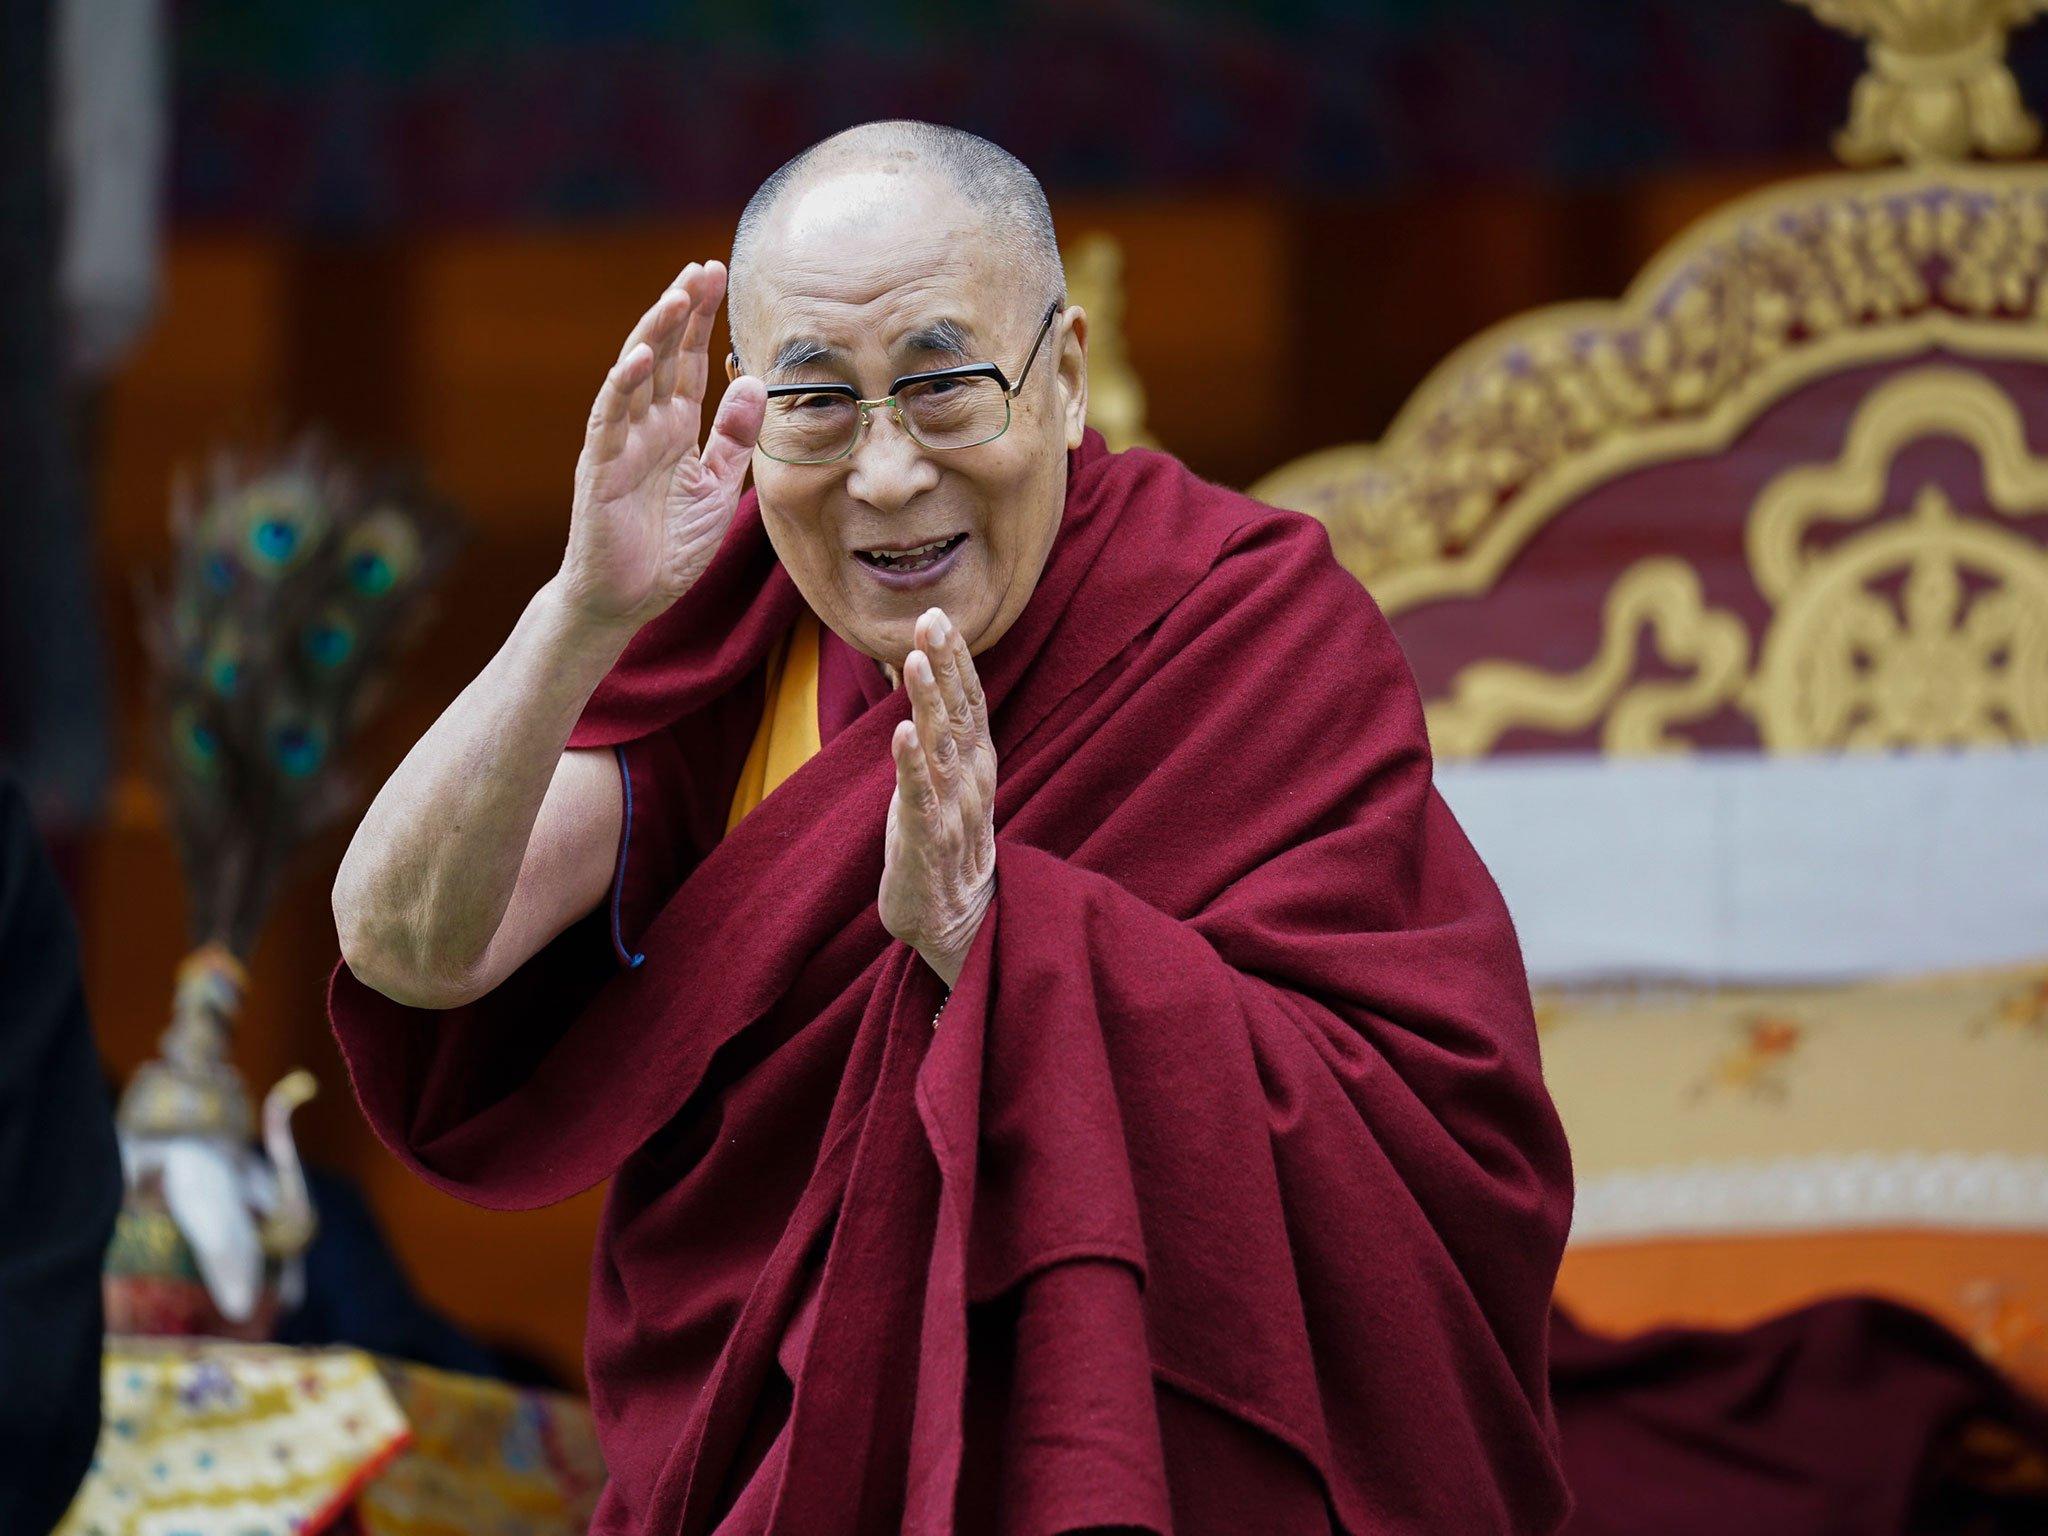 Dalai Lama says ‘Europe belongs to the Europeans’ and suggests